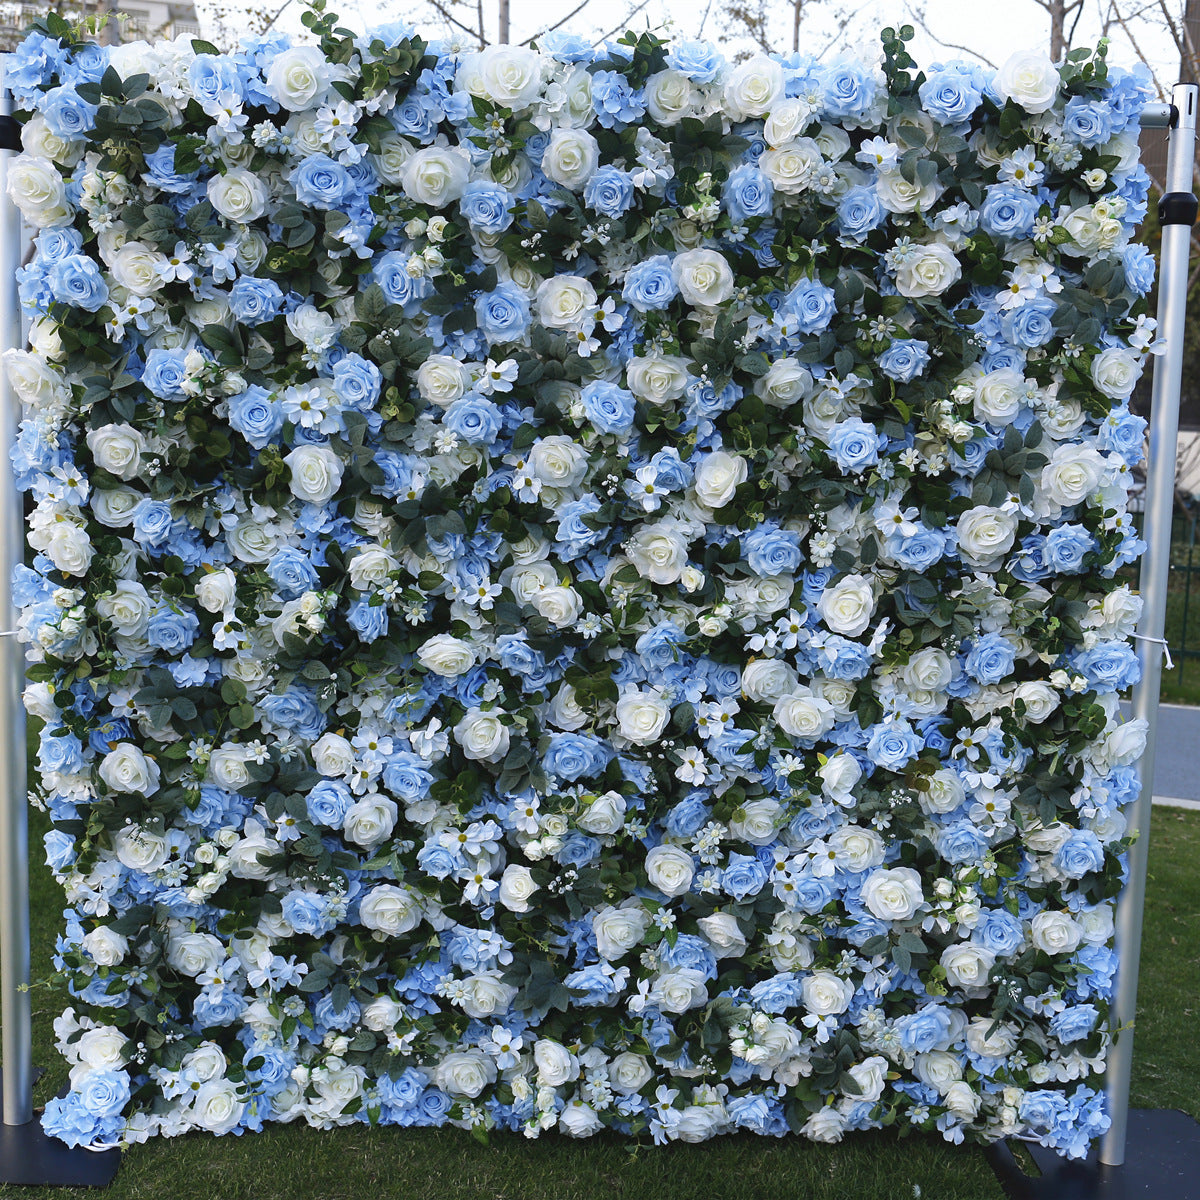 5D Artificial Flower Wall Arrangement Wedding Party Birthday Backdrop Decor HQ9039